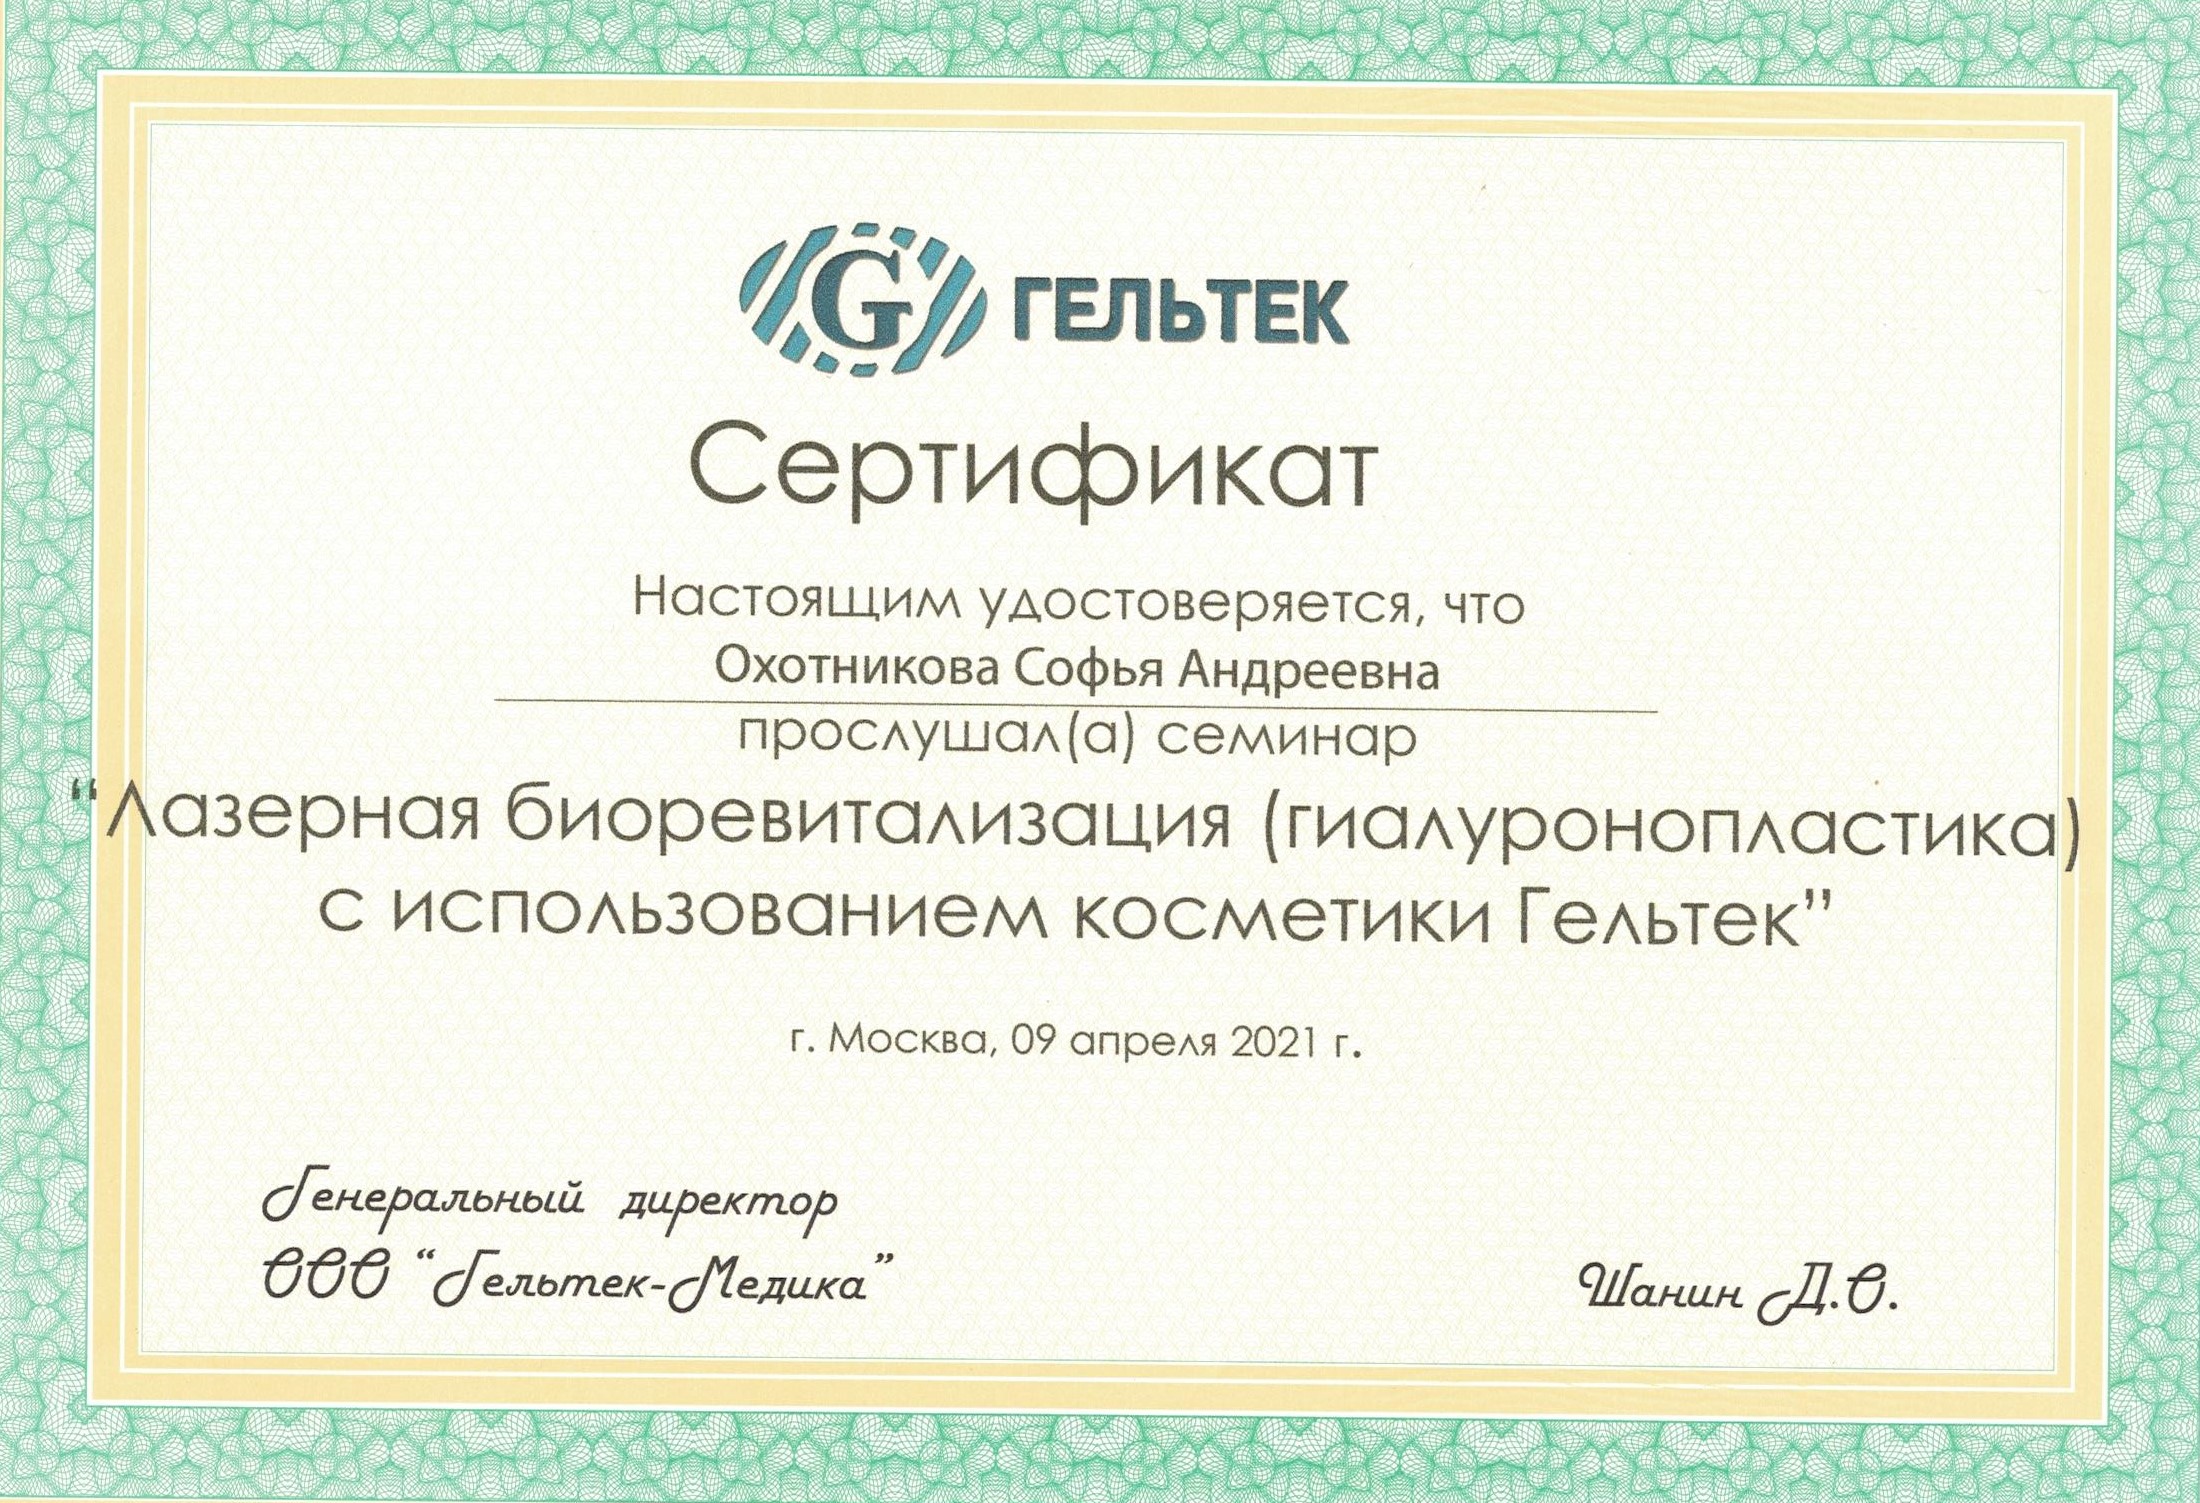 Косметология сертификаты